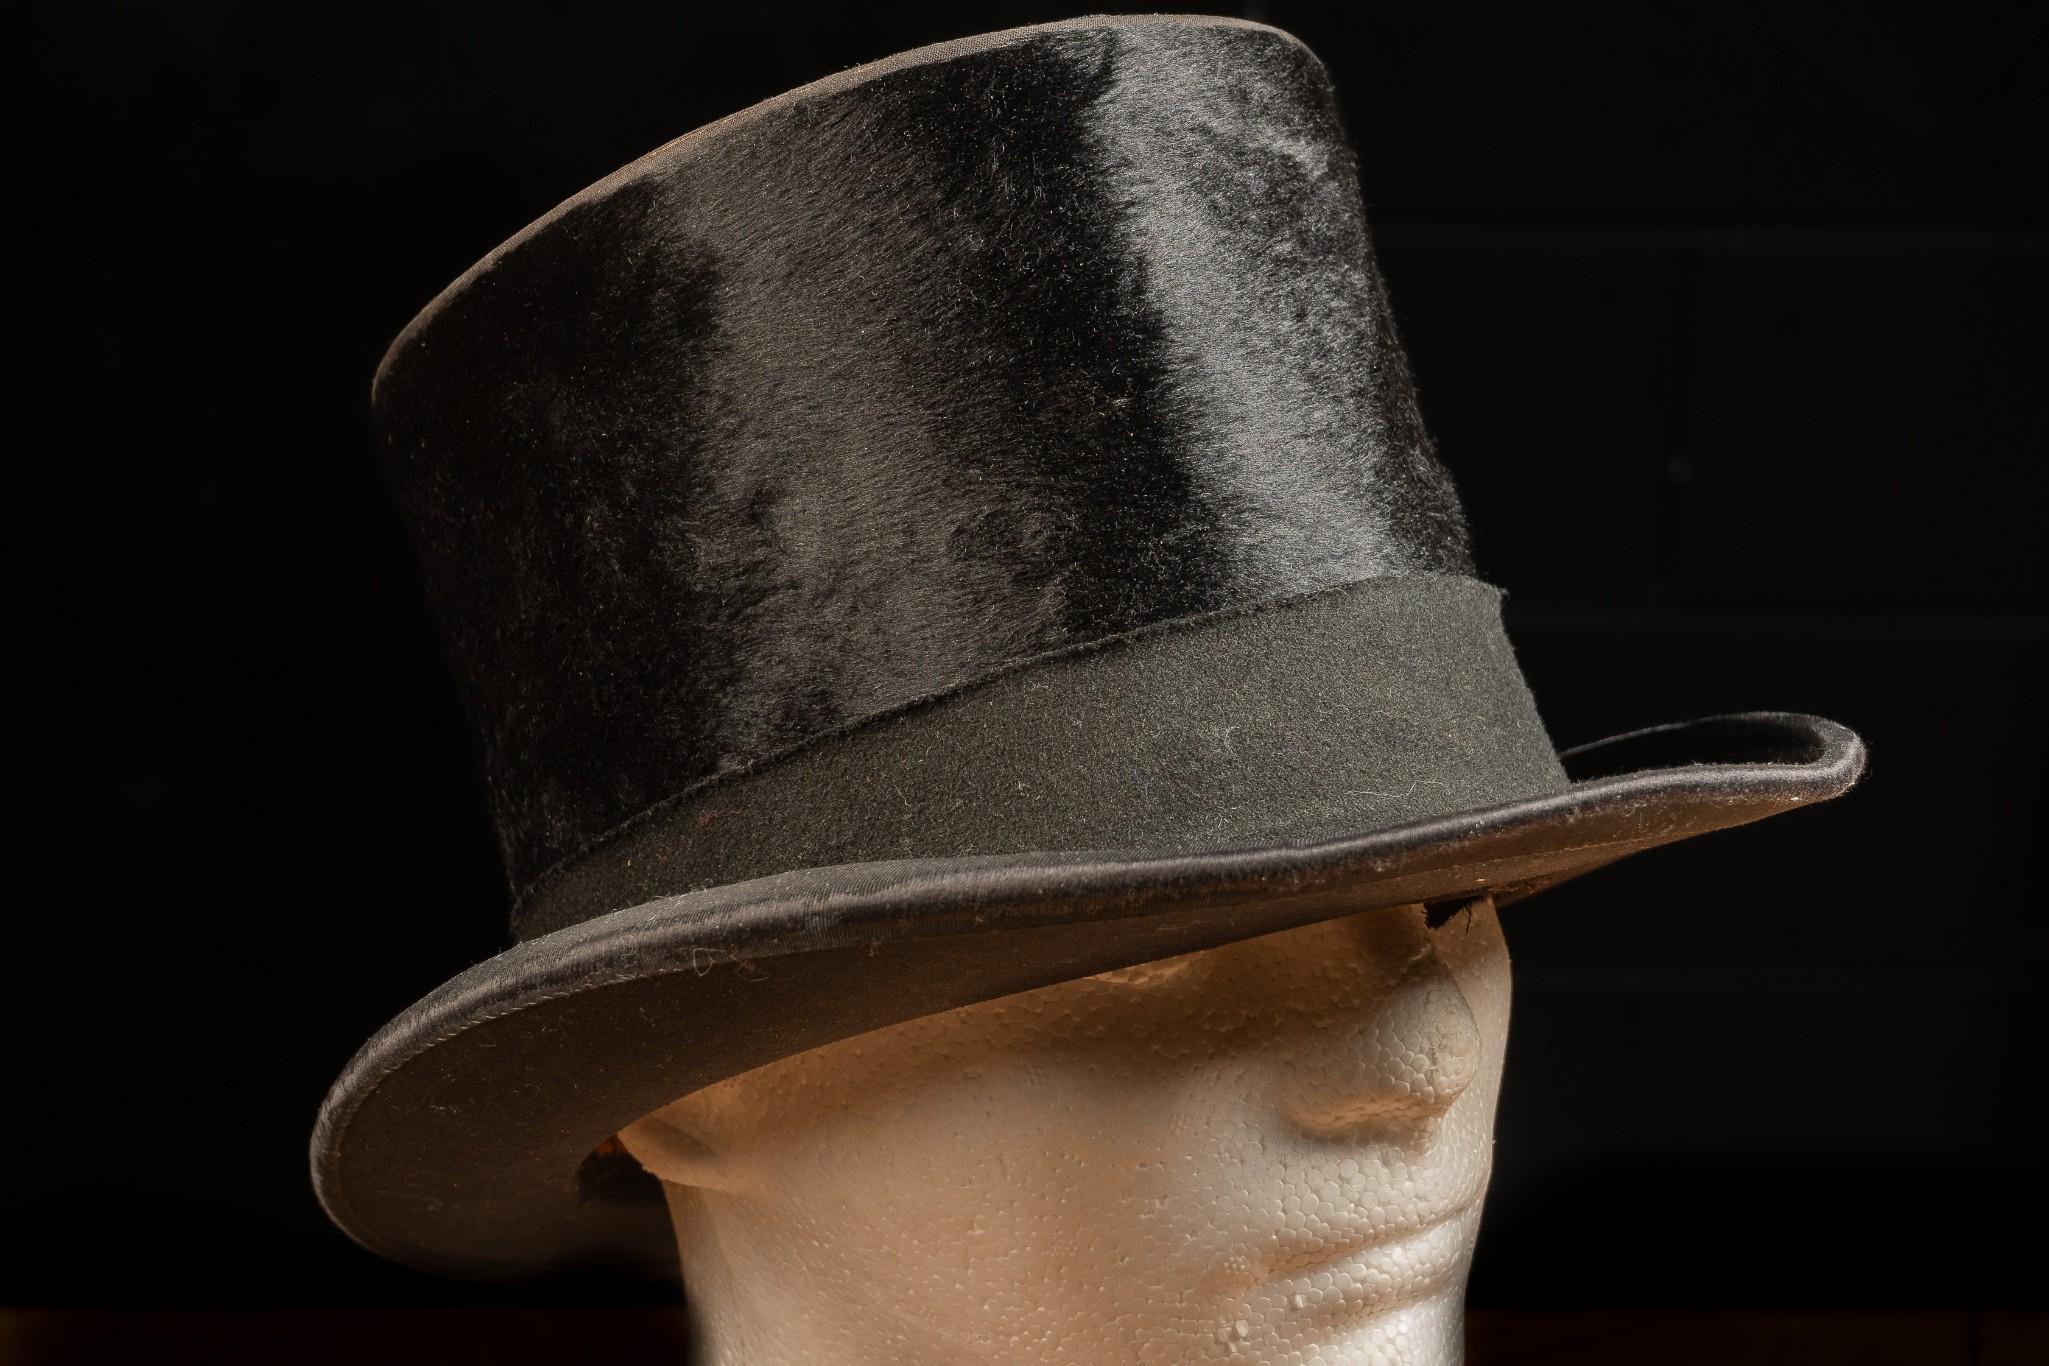 Early 20th Century Pollitt Mallin Hat Co. Beaver Stovepipe Hat